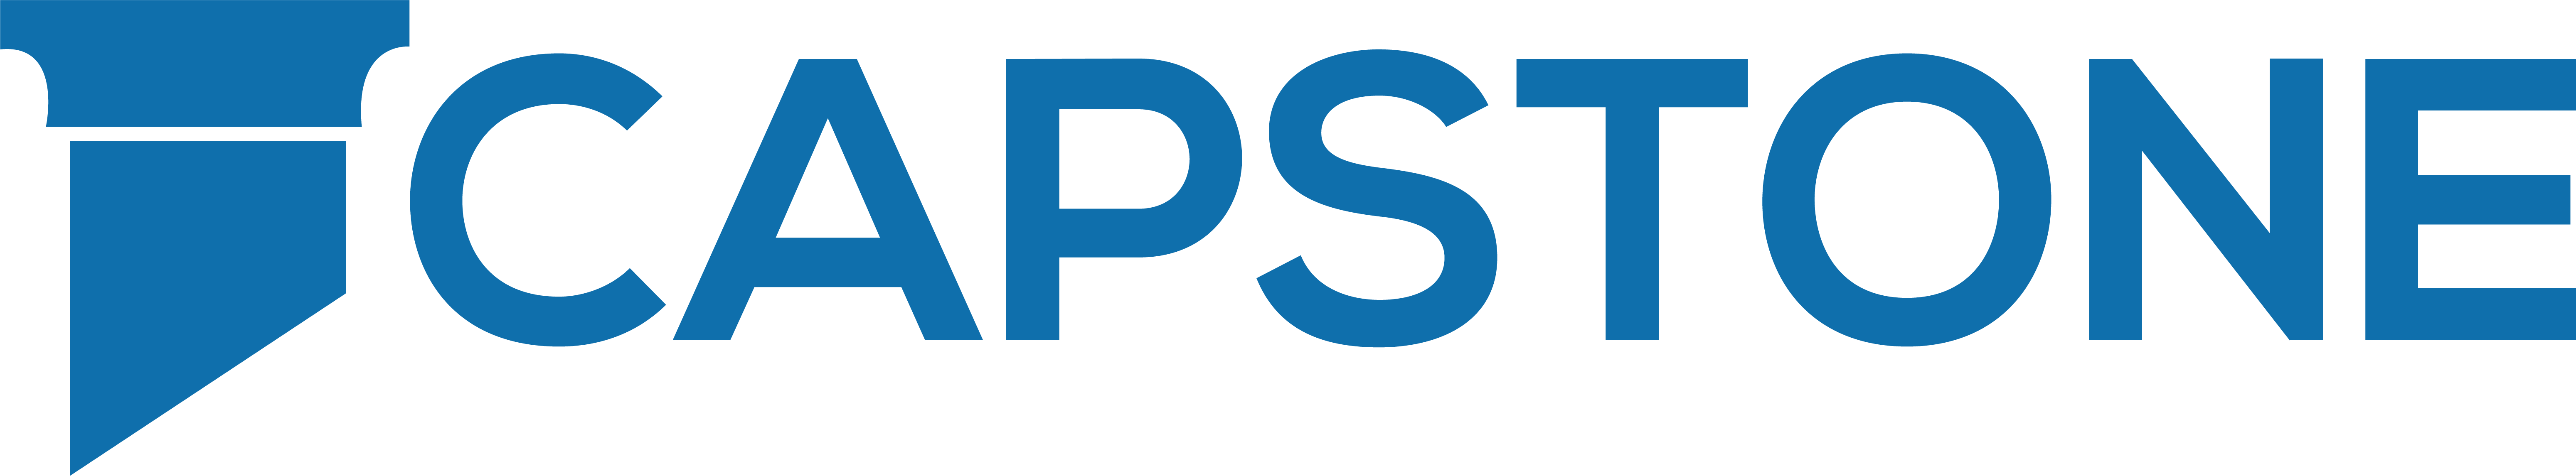 capstone project logo